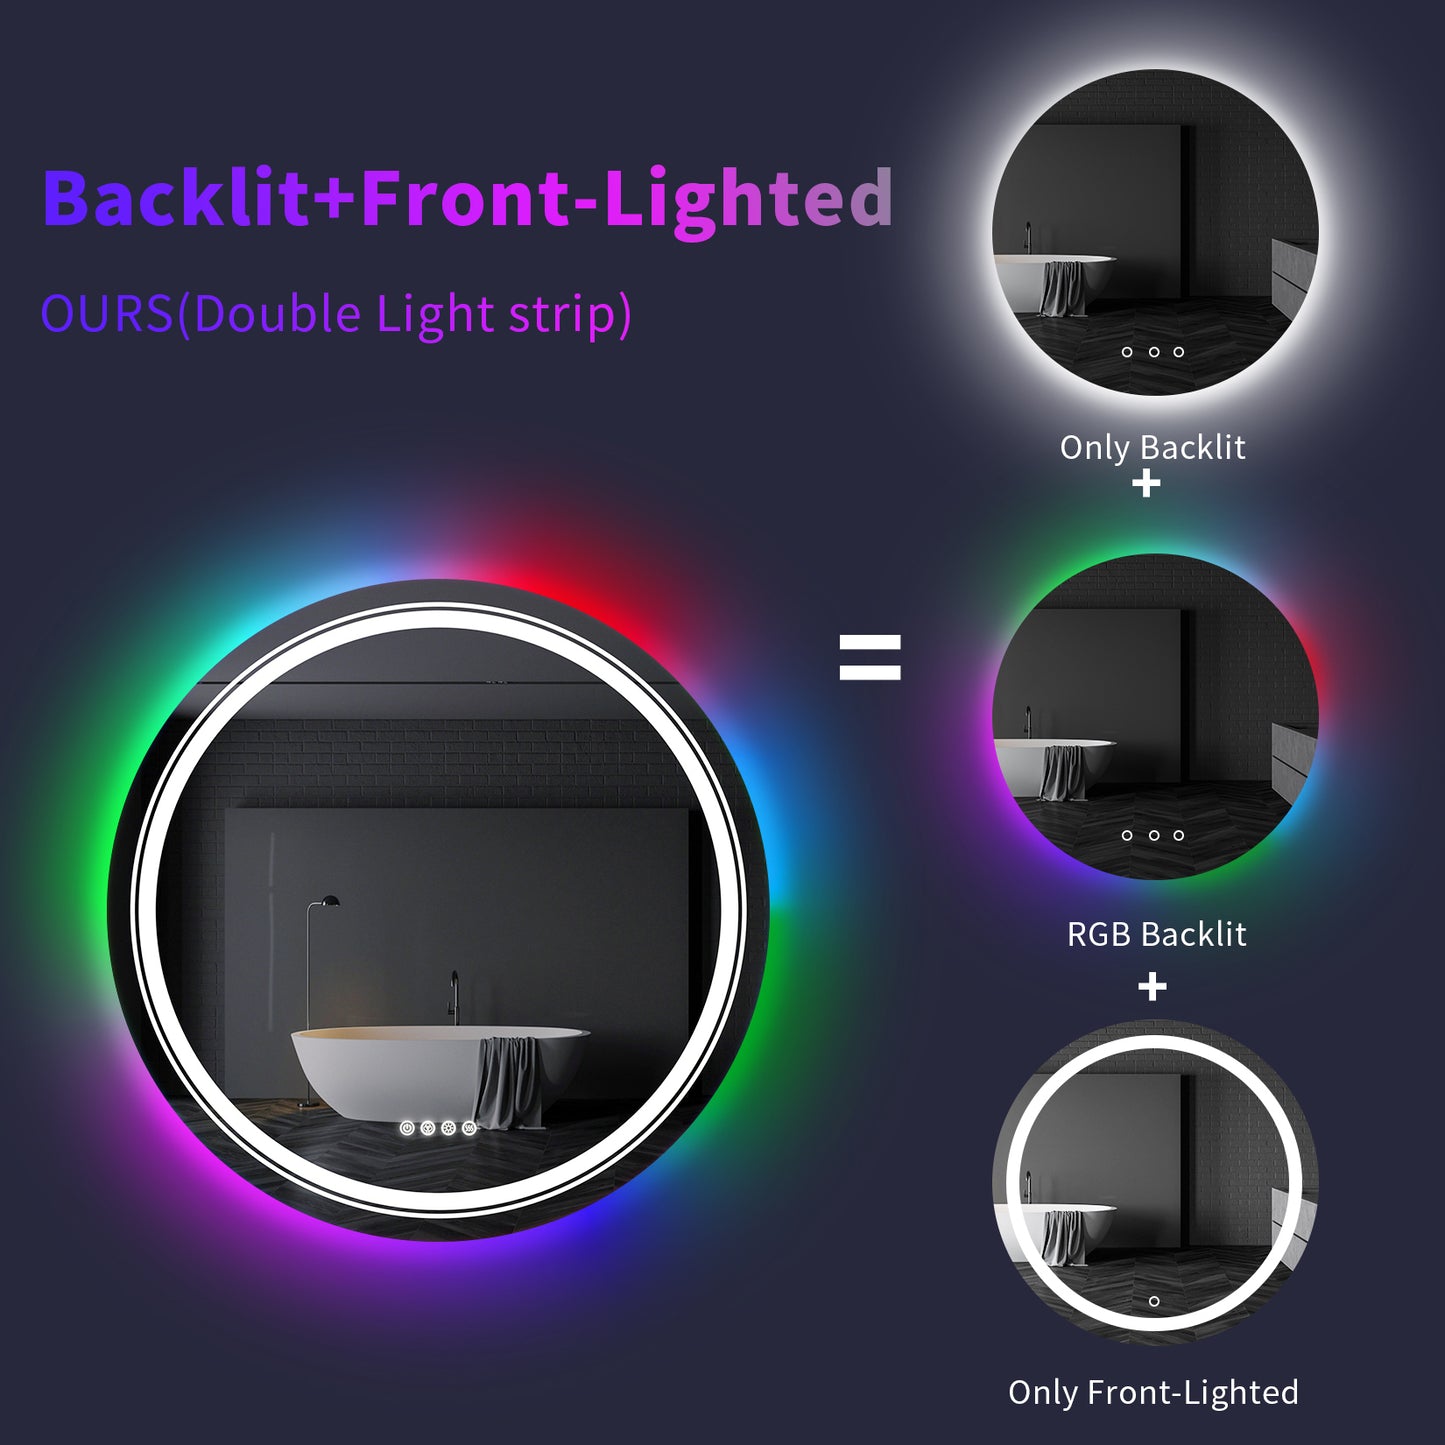 Round Led RGB Backlit Bathroom Mirror, Same as Amazon